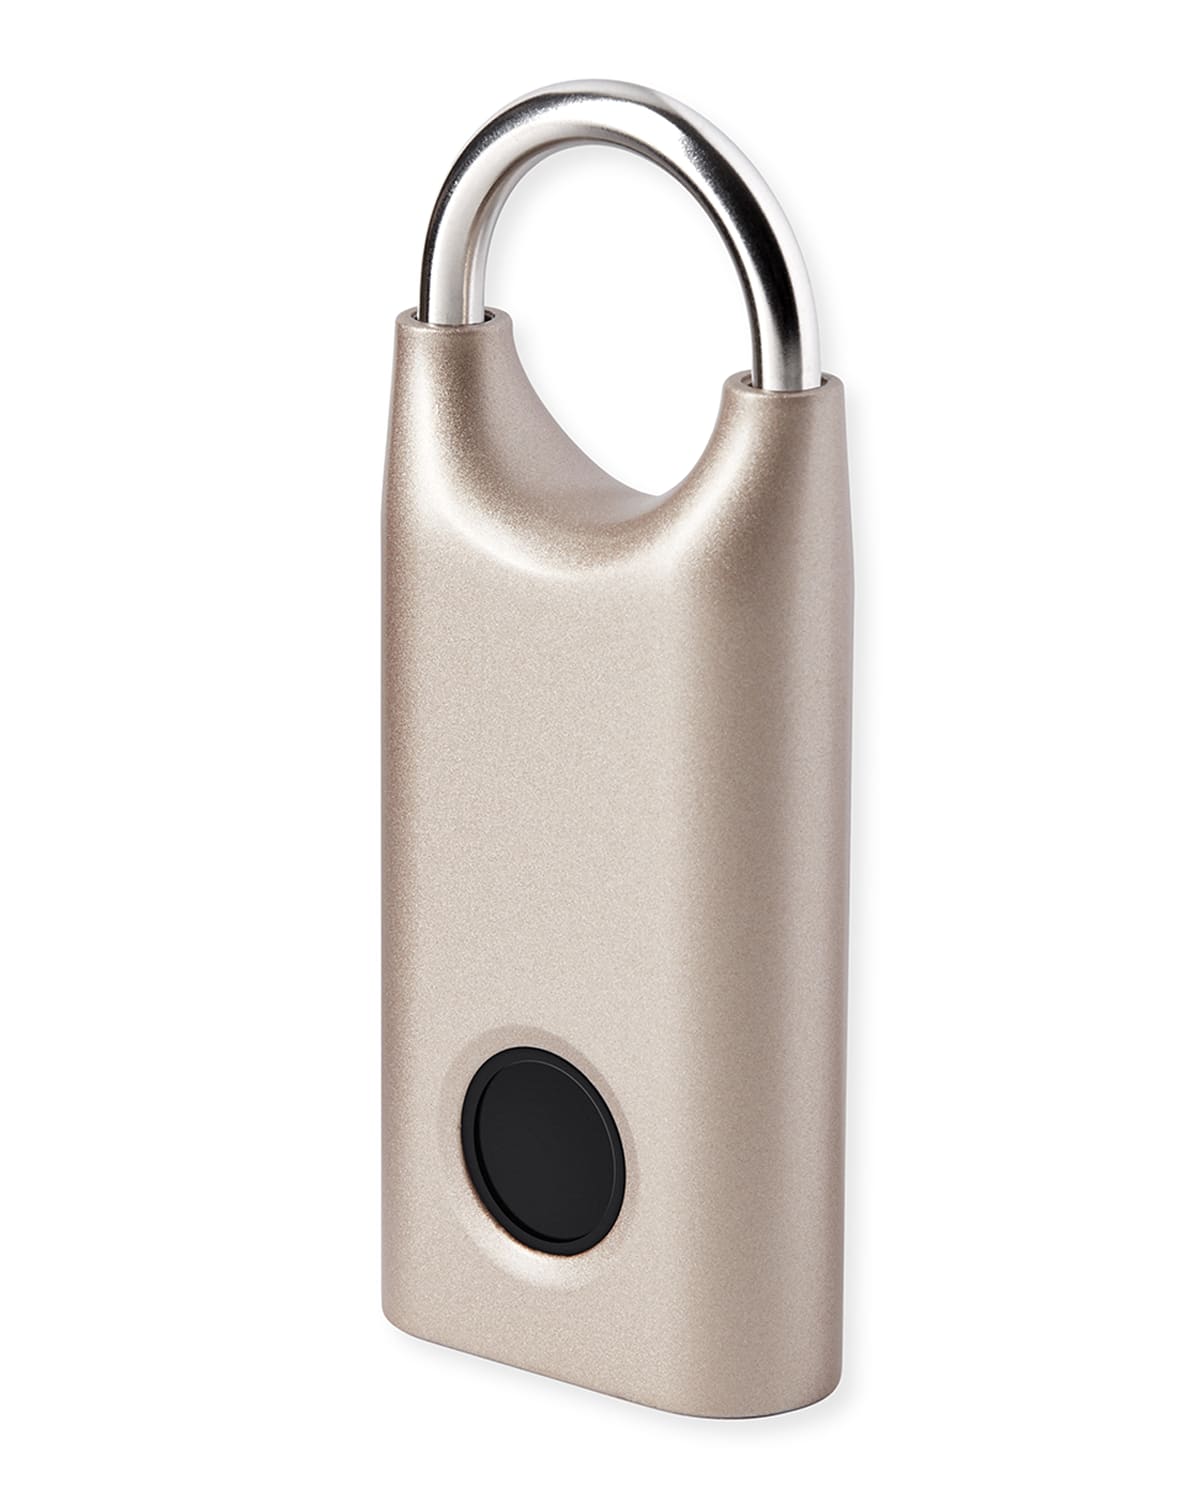 Lexon Design Nomaday Lock - Biometric Fingerprint Padlock